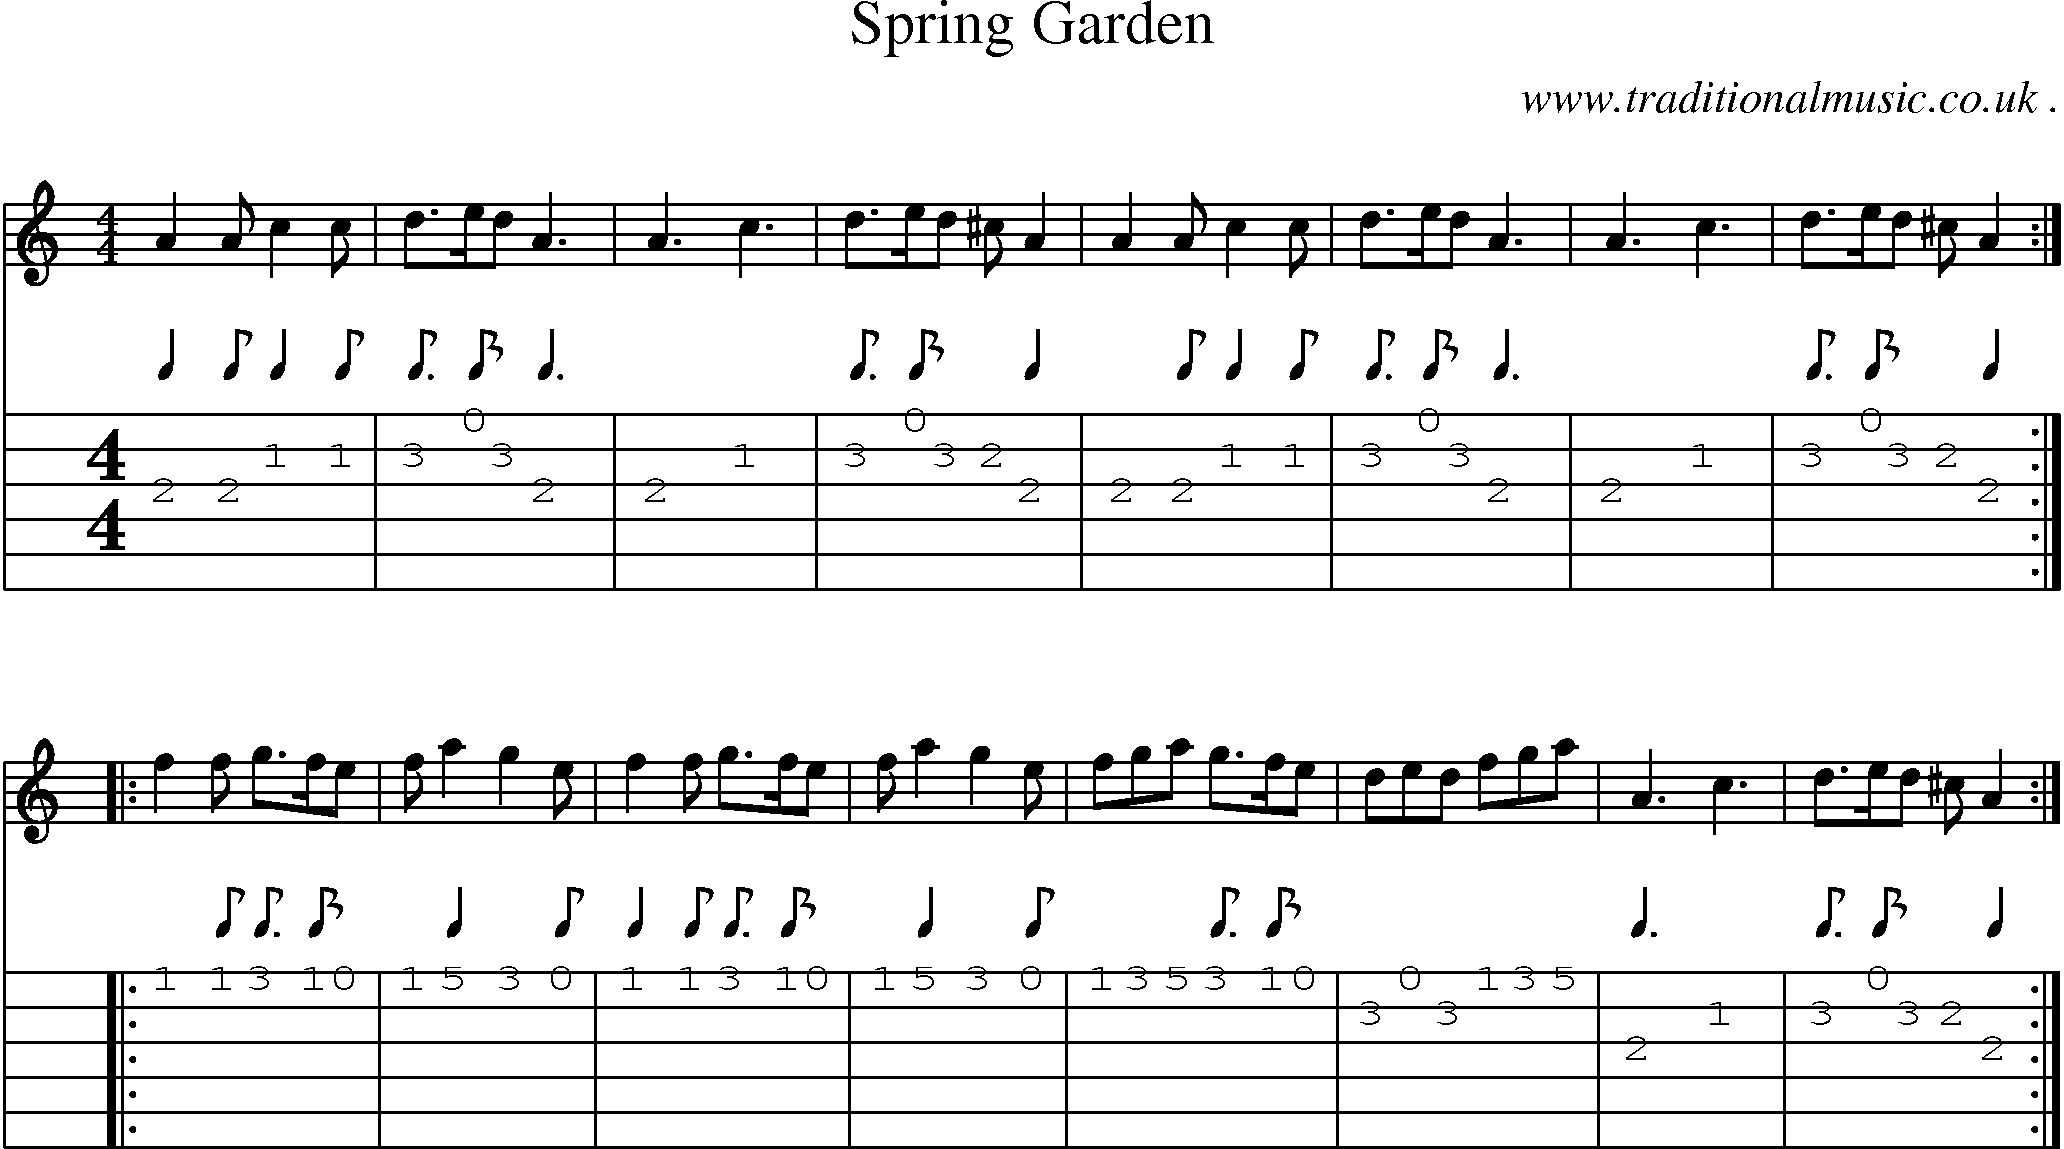 Sheet-Music and Guitar Tabs for Spring Garden